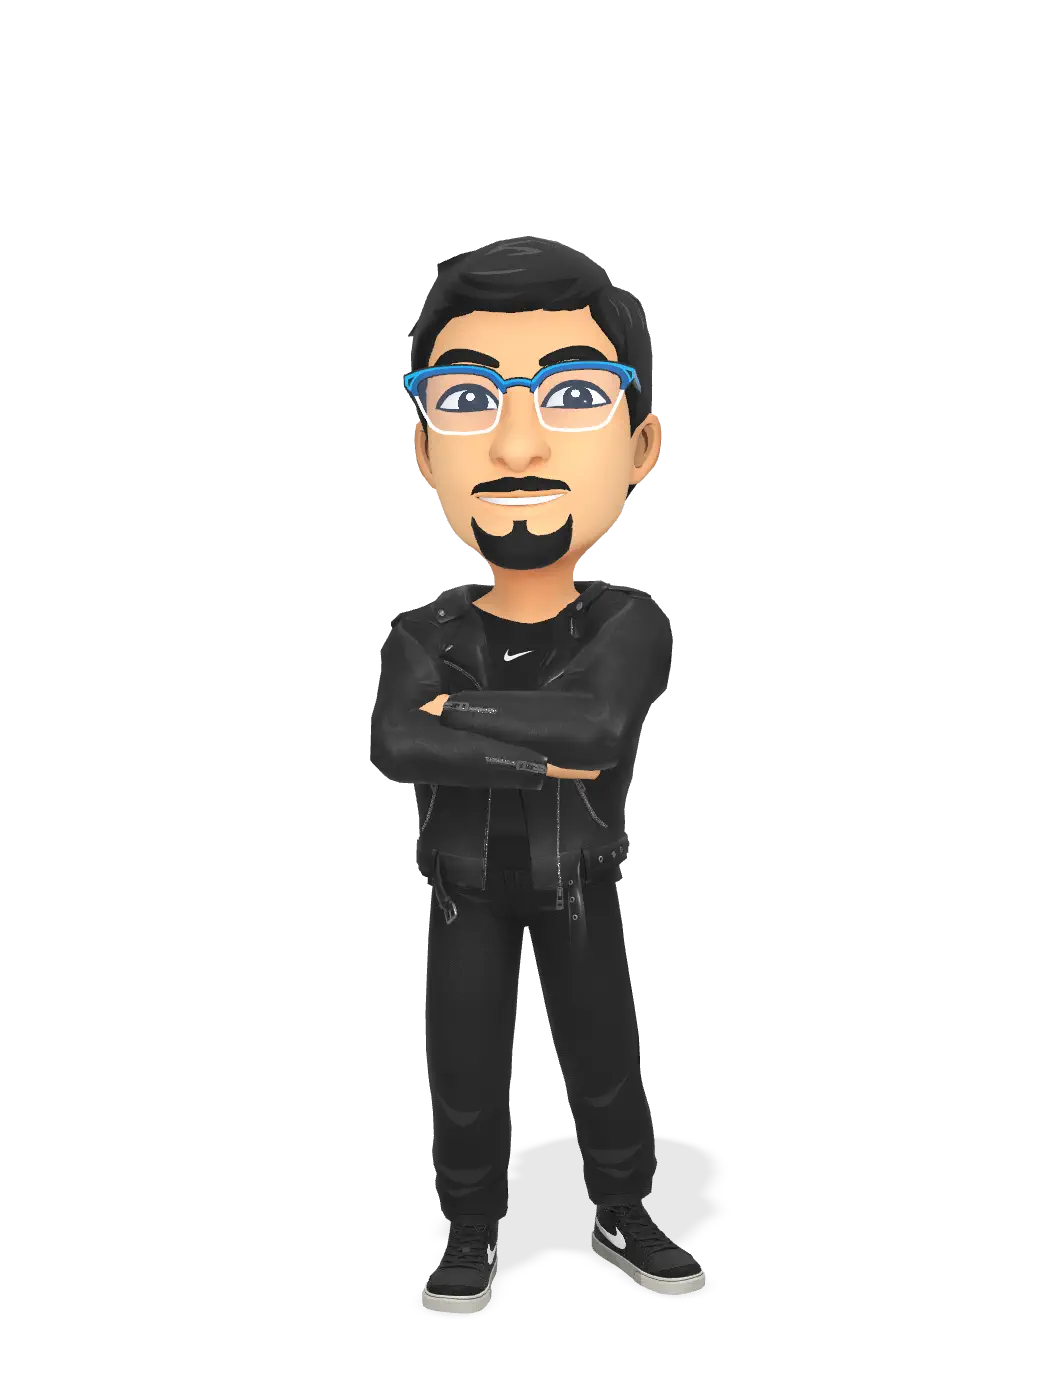 3D Bitmoji for darthabhinav avatar